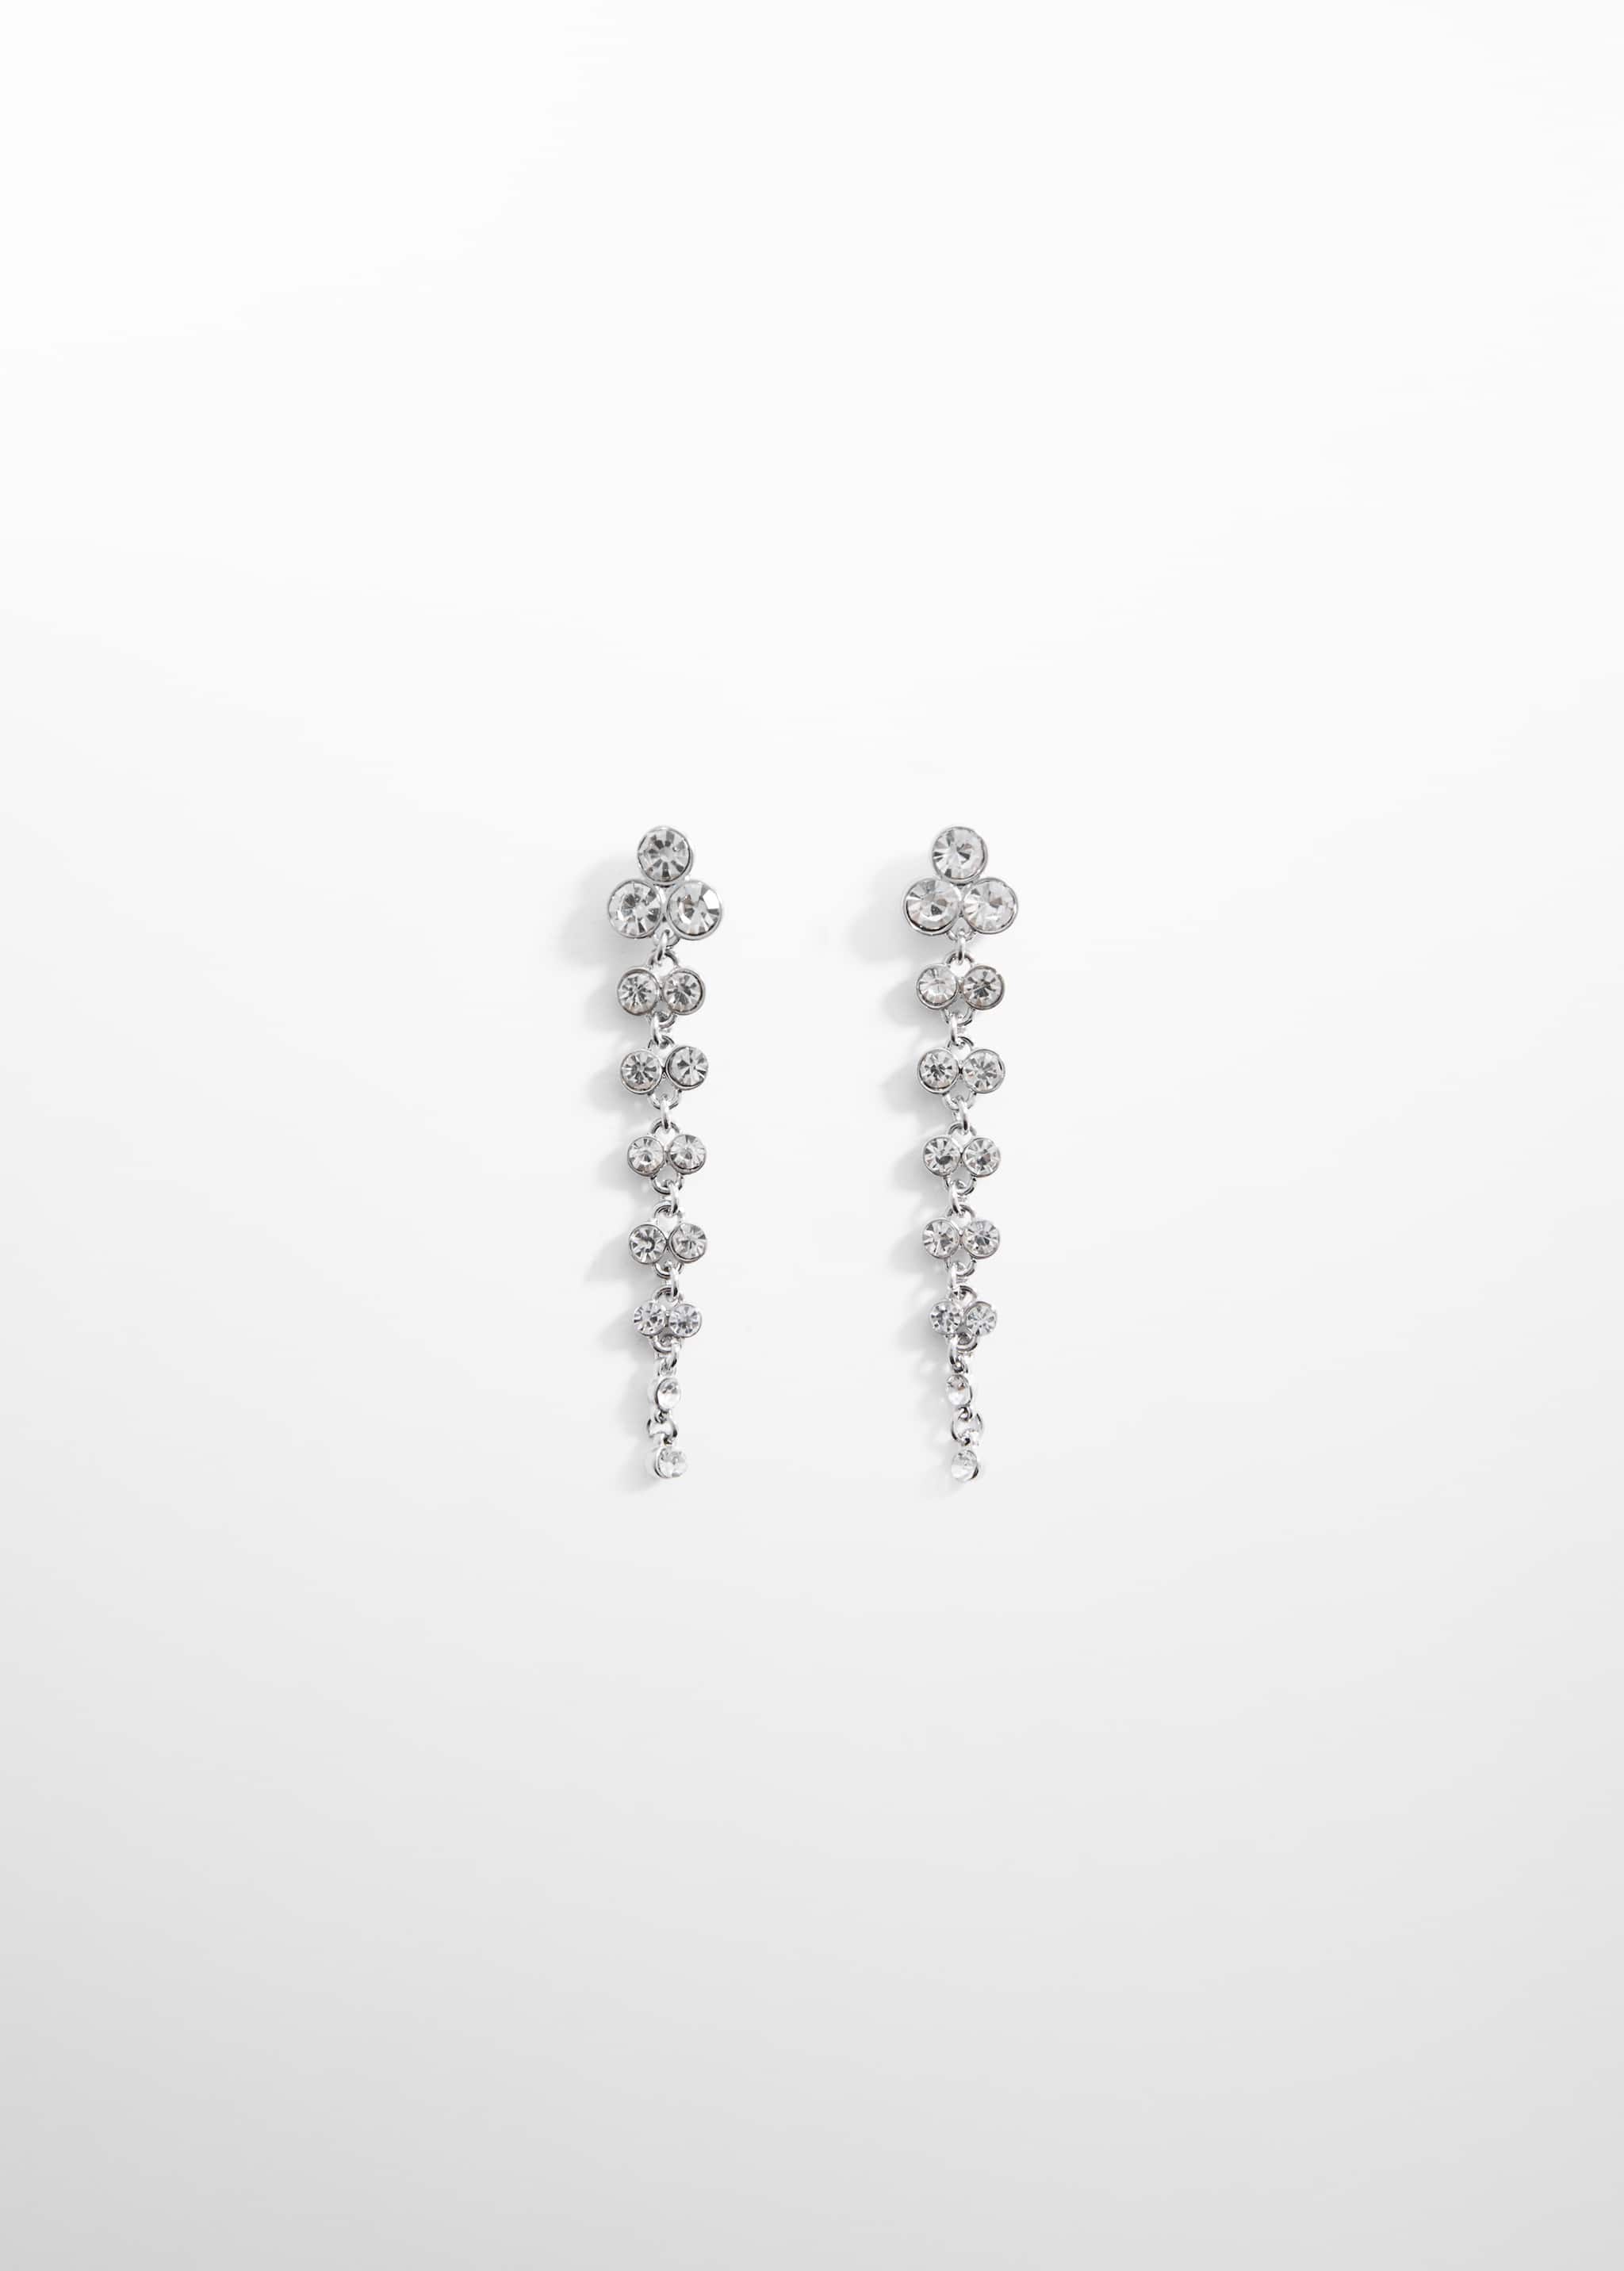 Long rhinestone earrings - Article without model